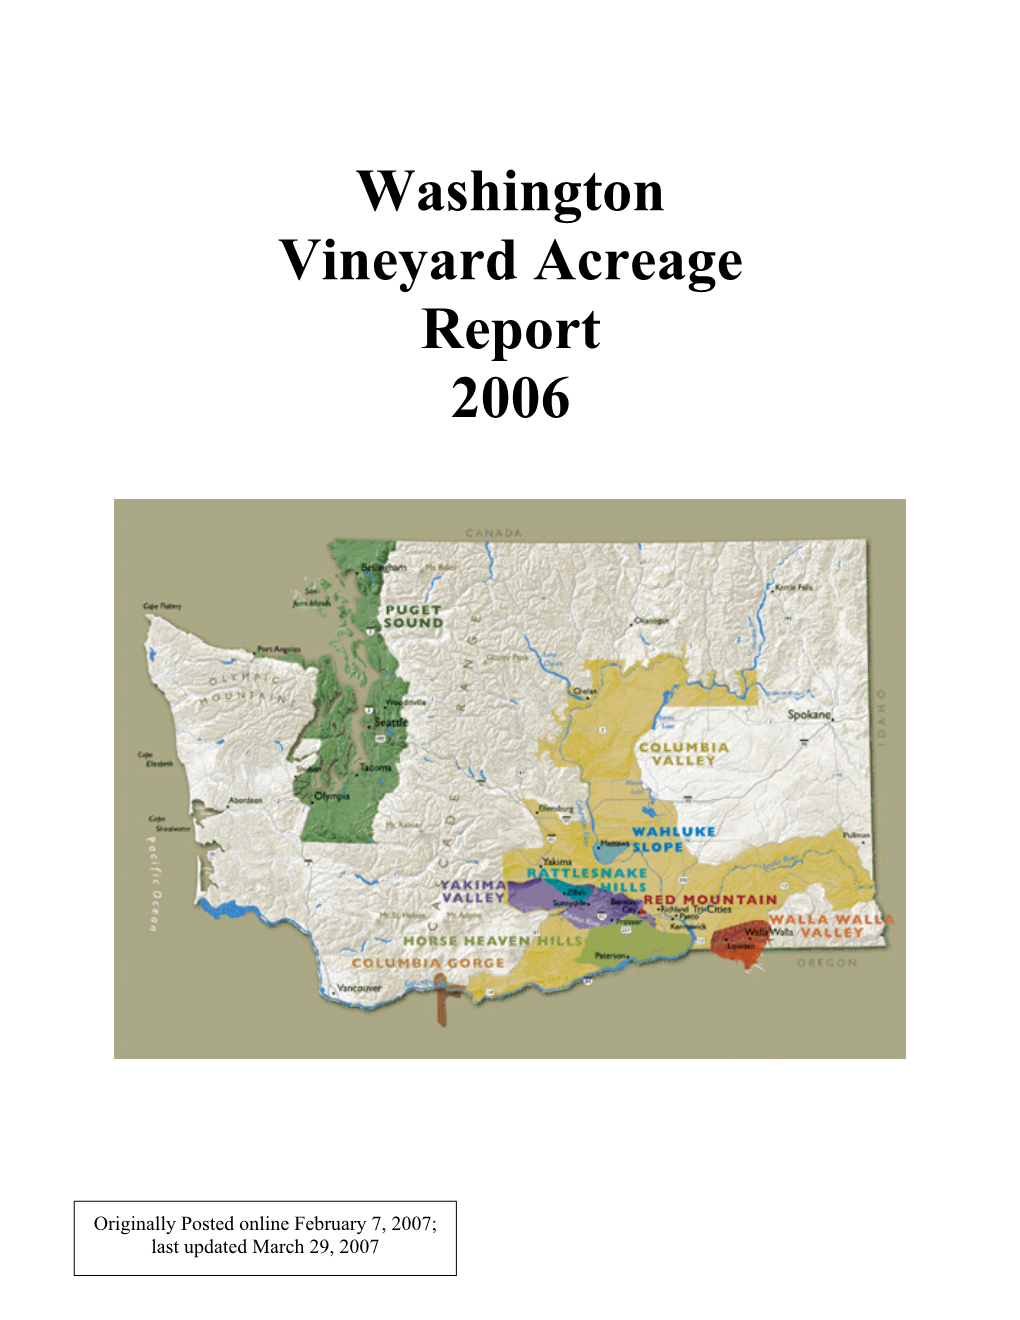 Washington Vineyard Acreage Report 2006